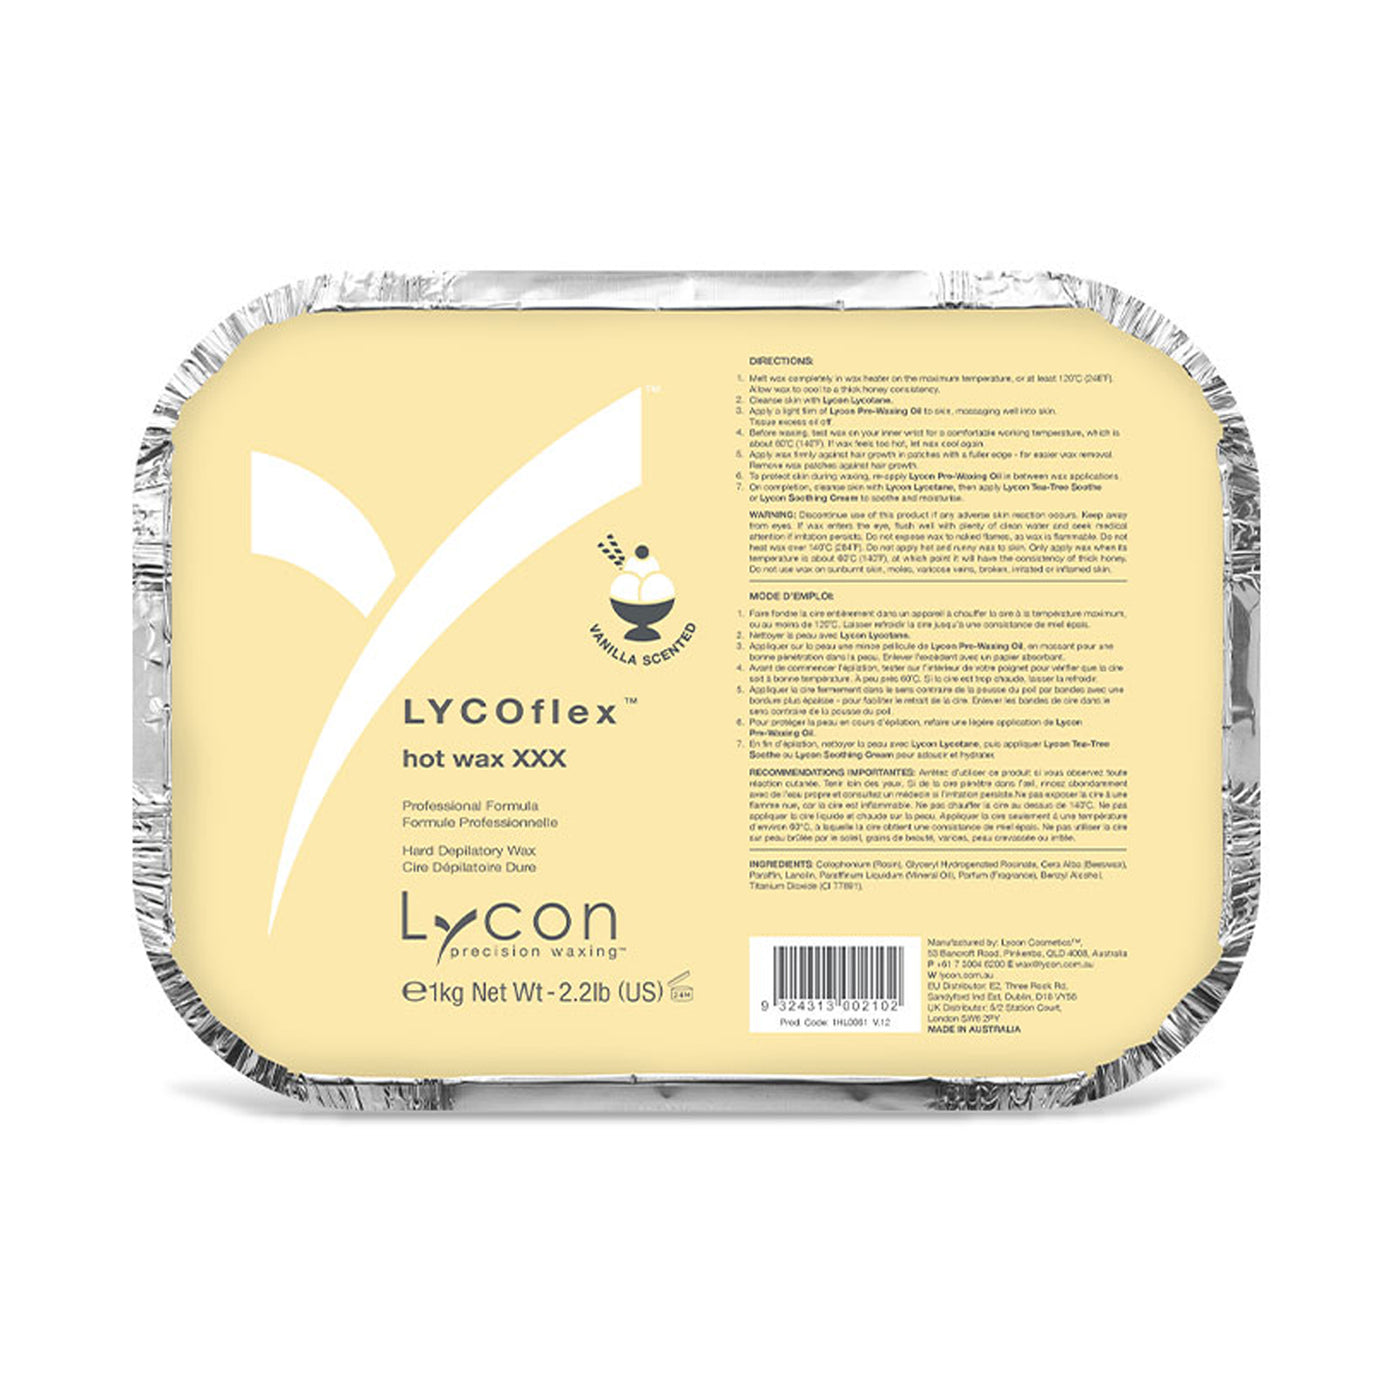 Lycon LycoFlex Vanilla Hot Wax 1kg